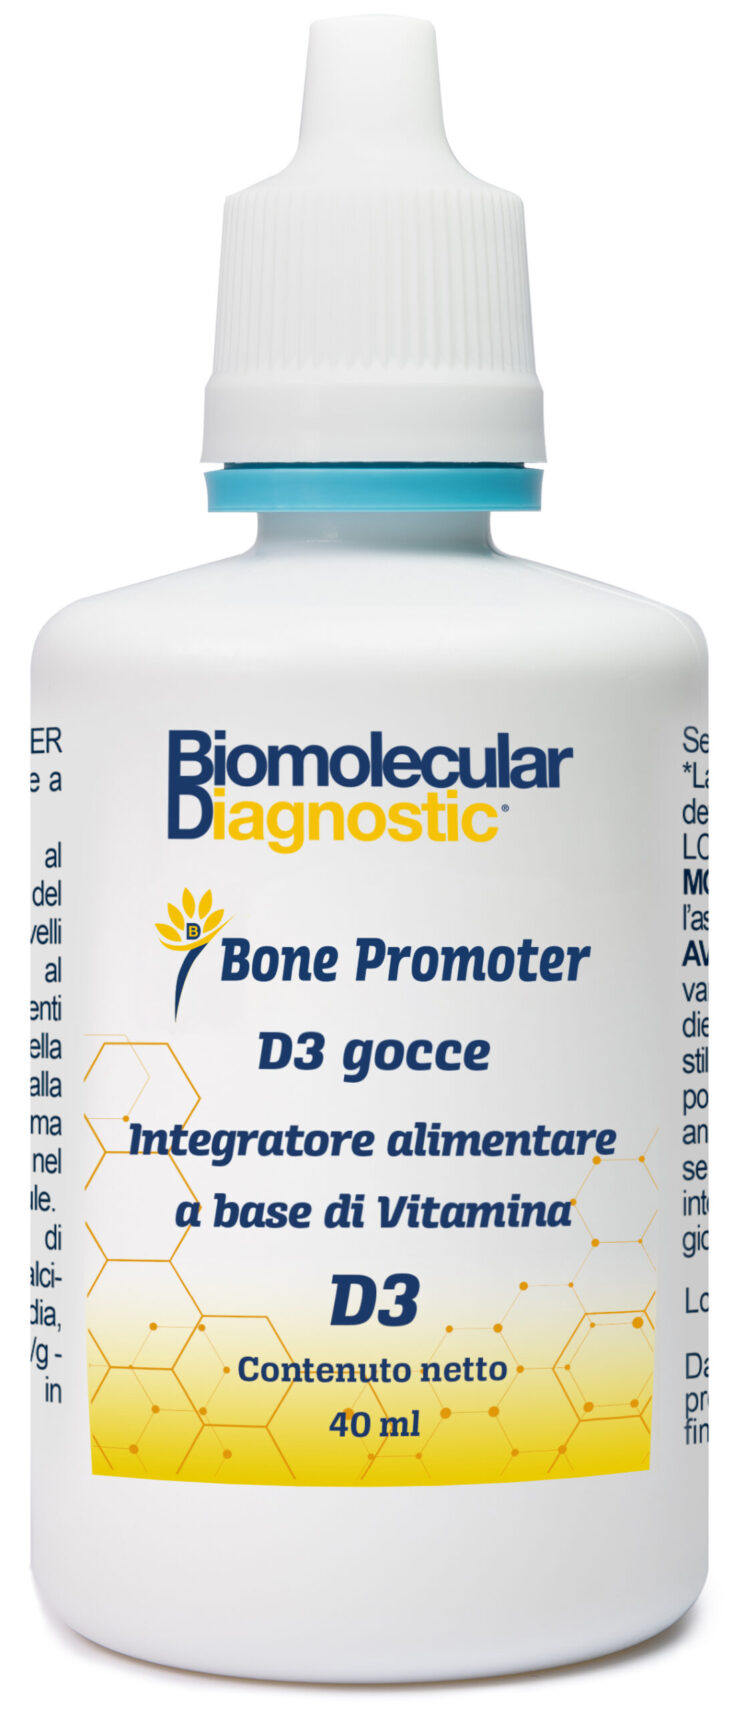 BONE PROMOTER di Biomolecular Diagnostic Firenze, l’integratore di vitamina D3 per la salute di ossa e organismo